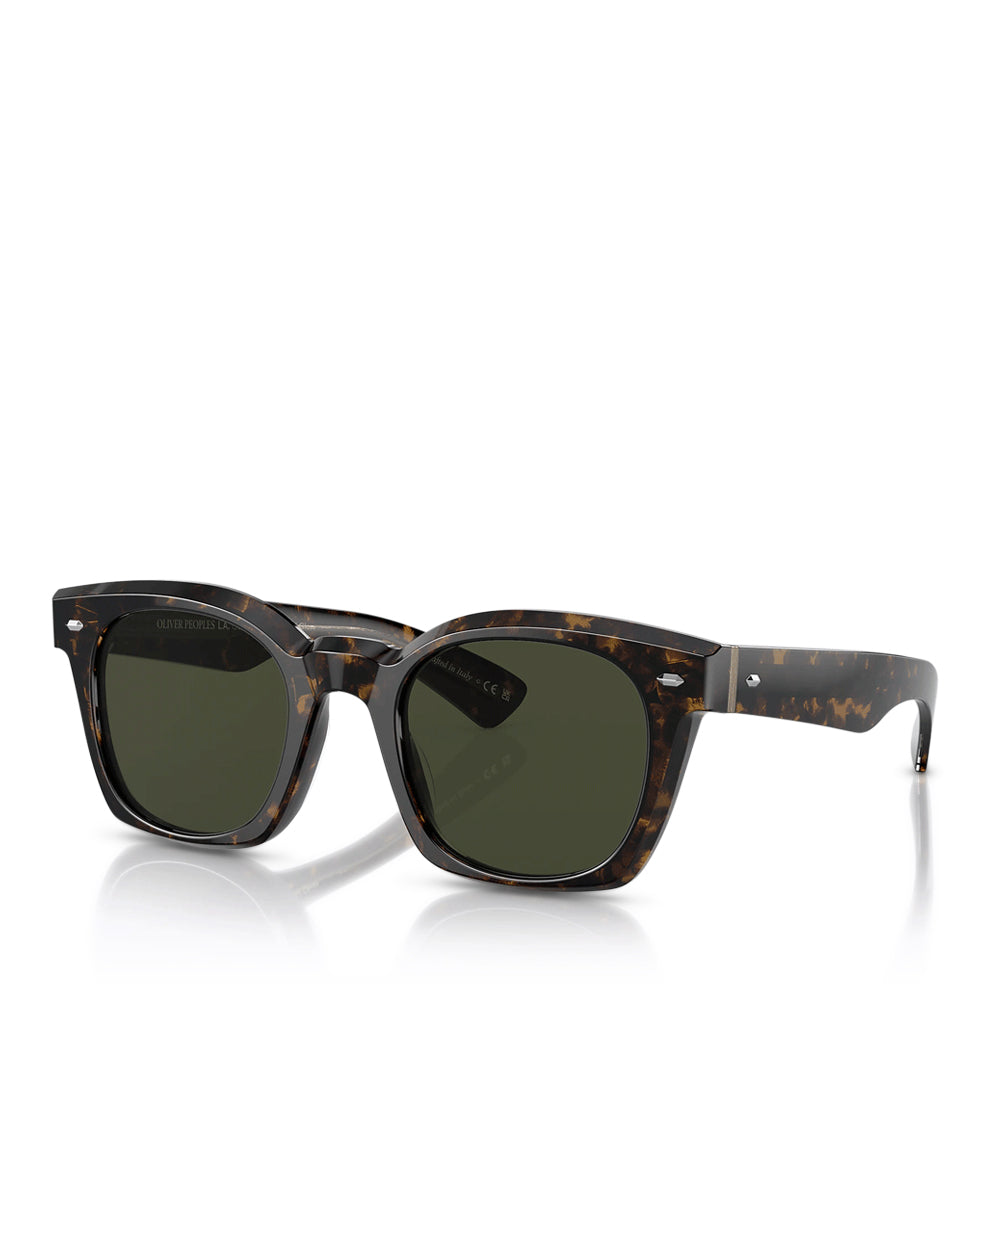 Merceaux Walnut Tortoise Sunglasses